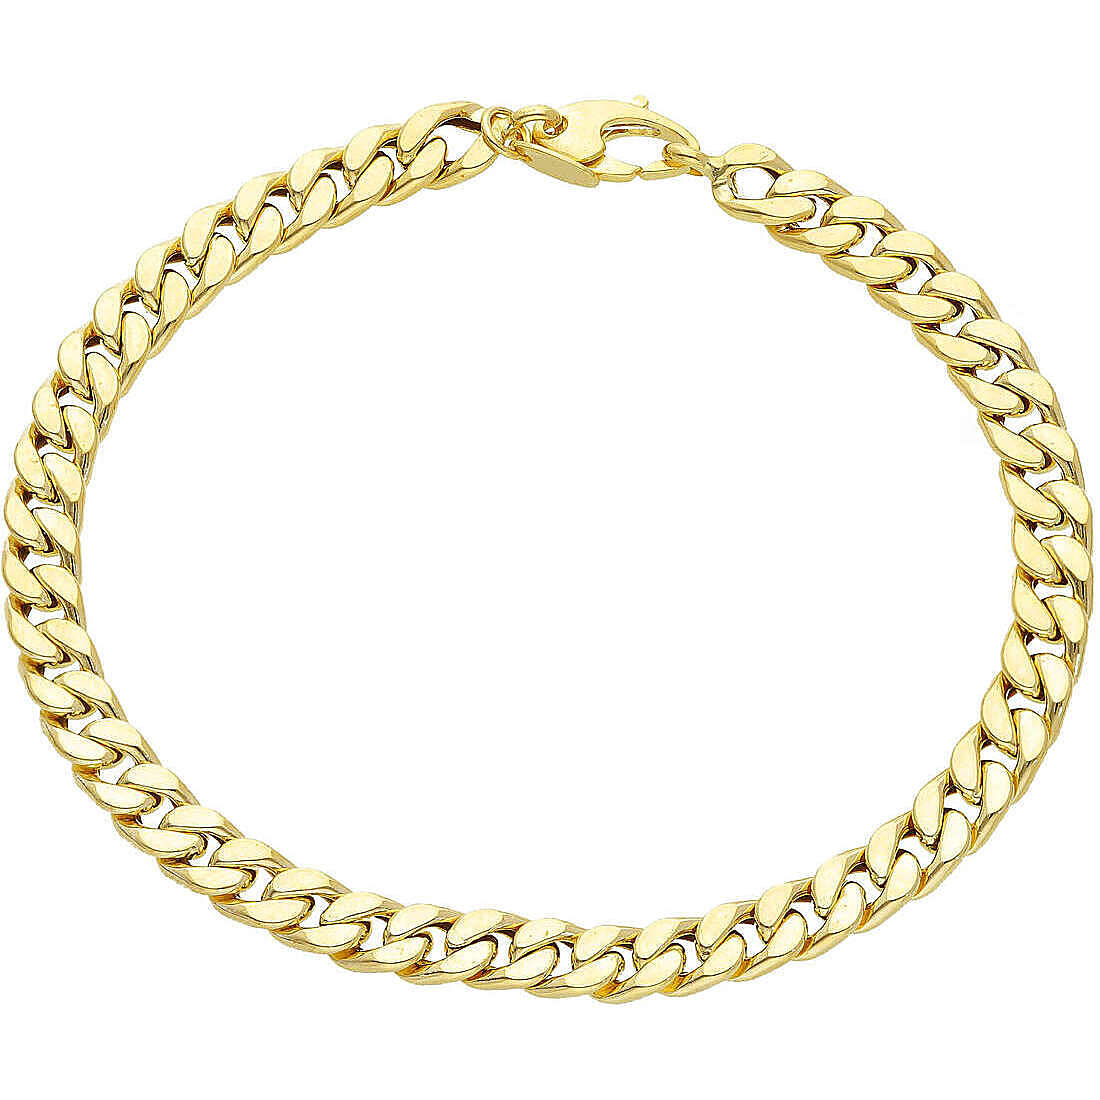 bracelet man Chain 18 kt Gold jewel GioiaPura Oro 750 GP-SVGT518GG21